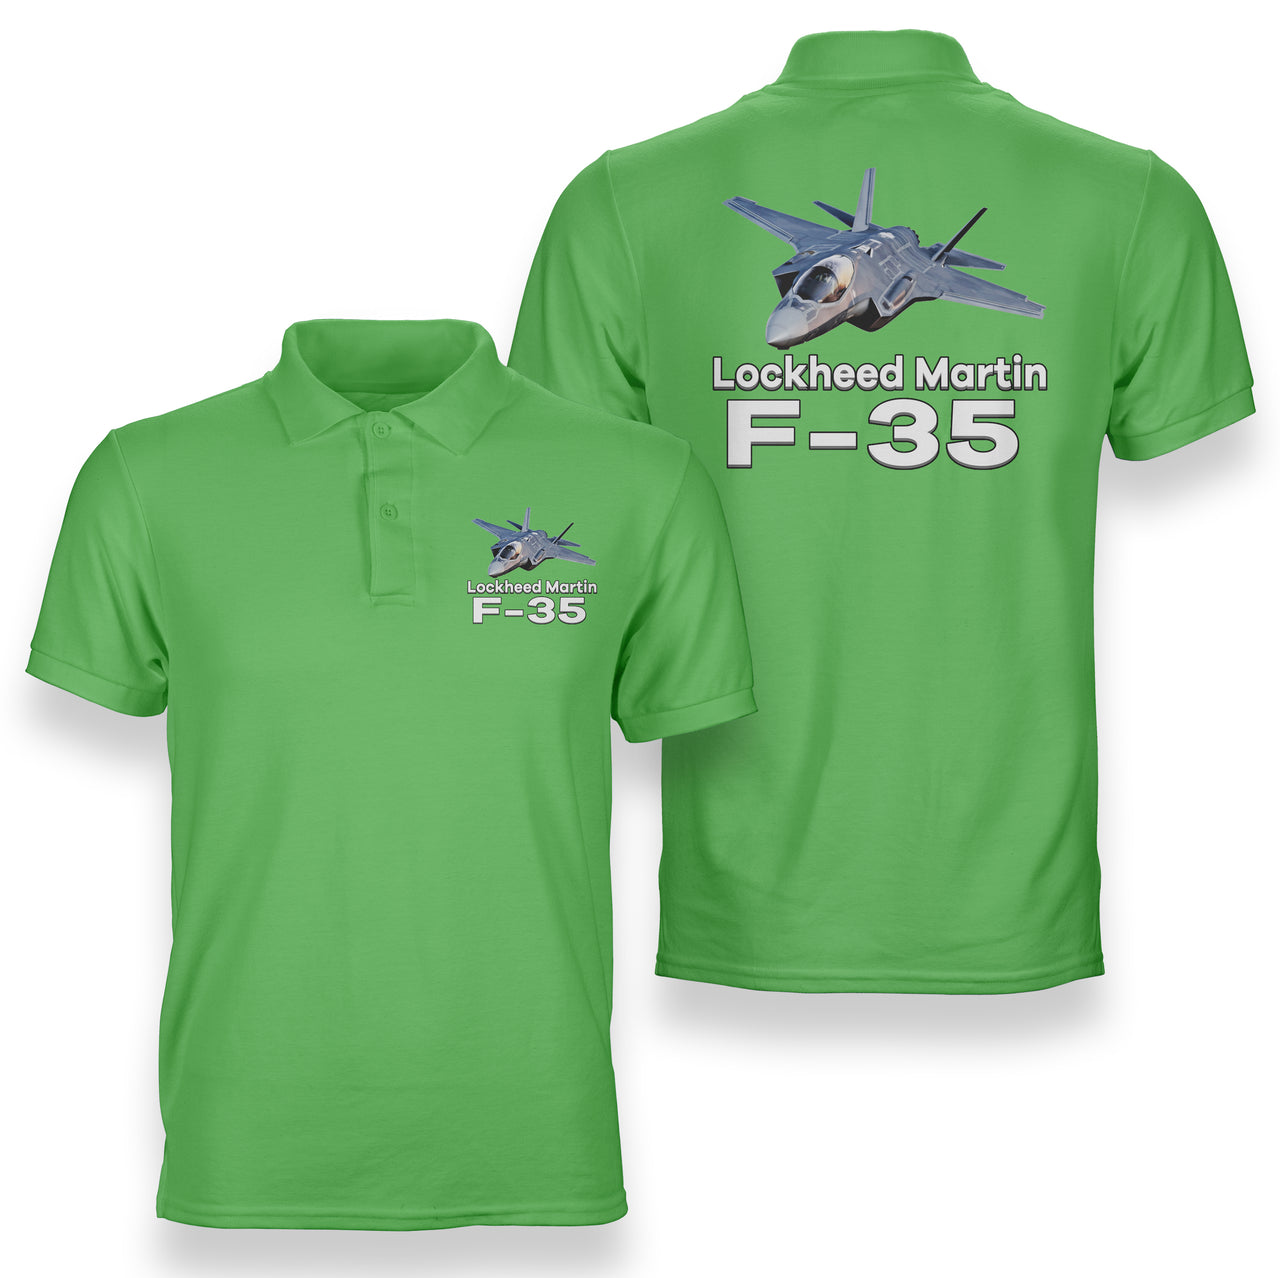 The Lockheed Martin F35 Designed Double Side Polo T-Shirts